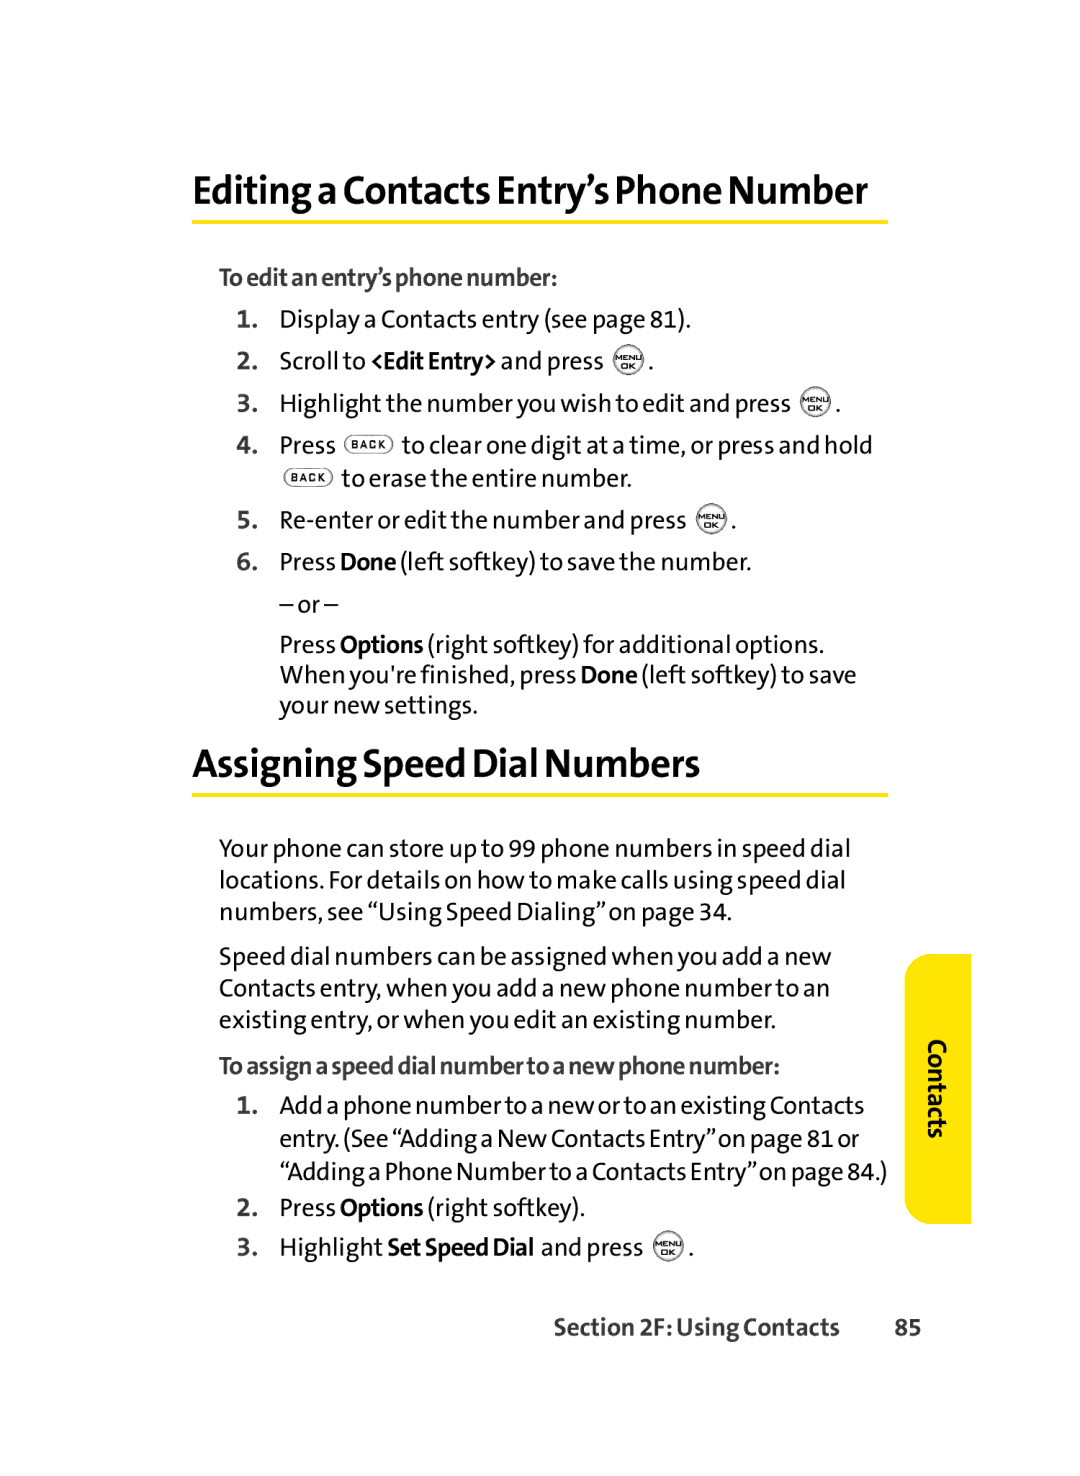 Sprint Nextel LX350 Assigning Speed Dial Numbers, Toeditanentry’sphonenumber, Toassignaspeeddialnumbertoanewphonenumber 